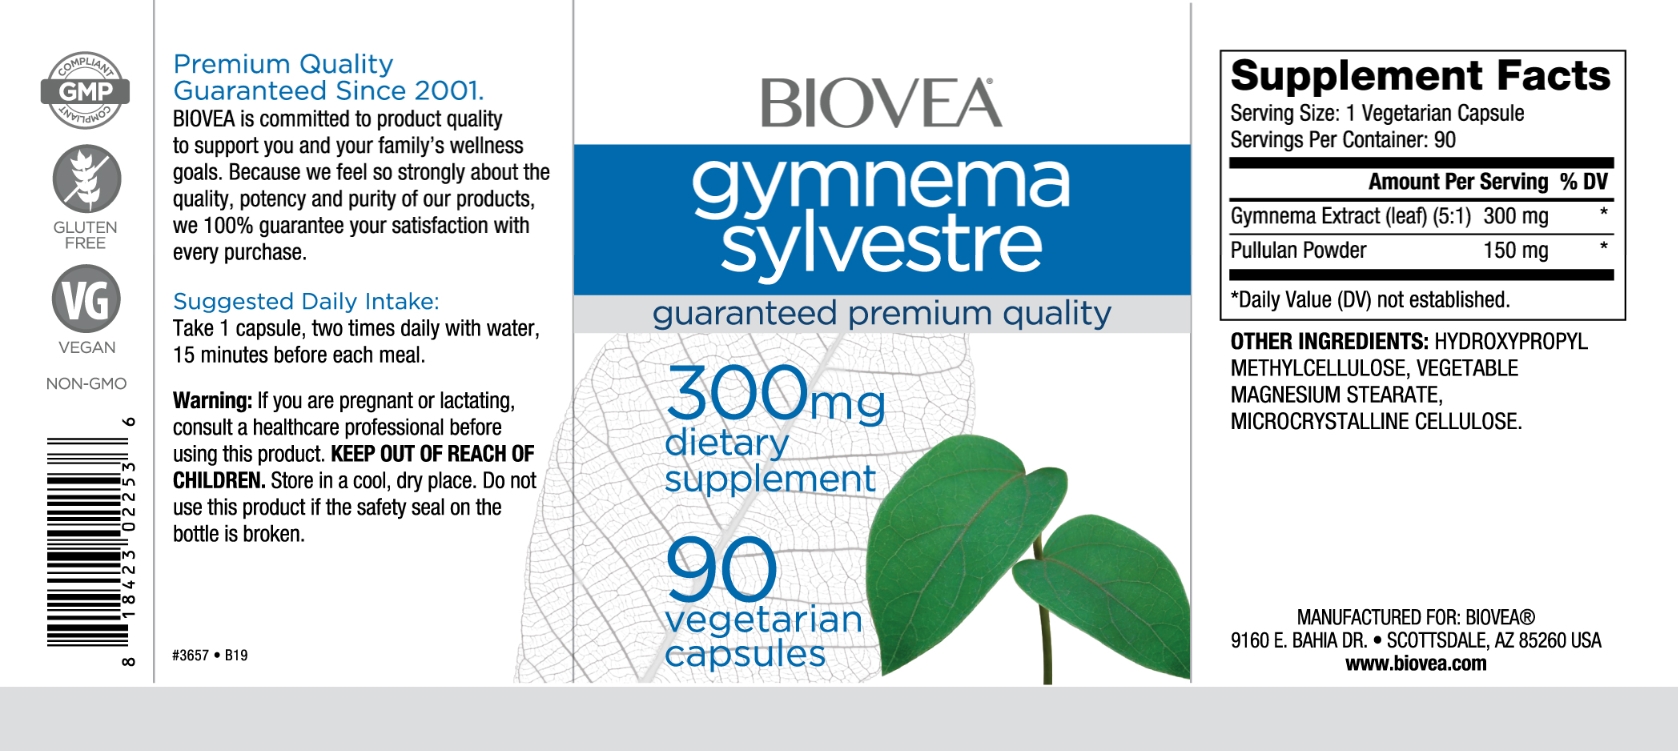 BIOVEA  GYMNEMA SYLVESTRE 300 mg / 90 Vegetarian Capsules